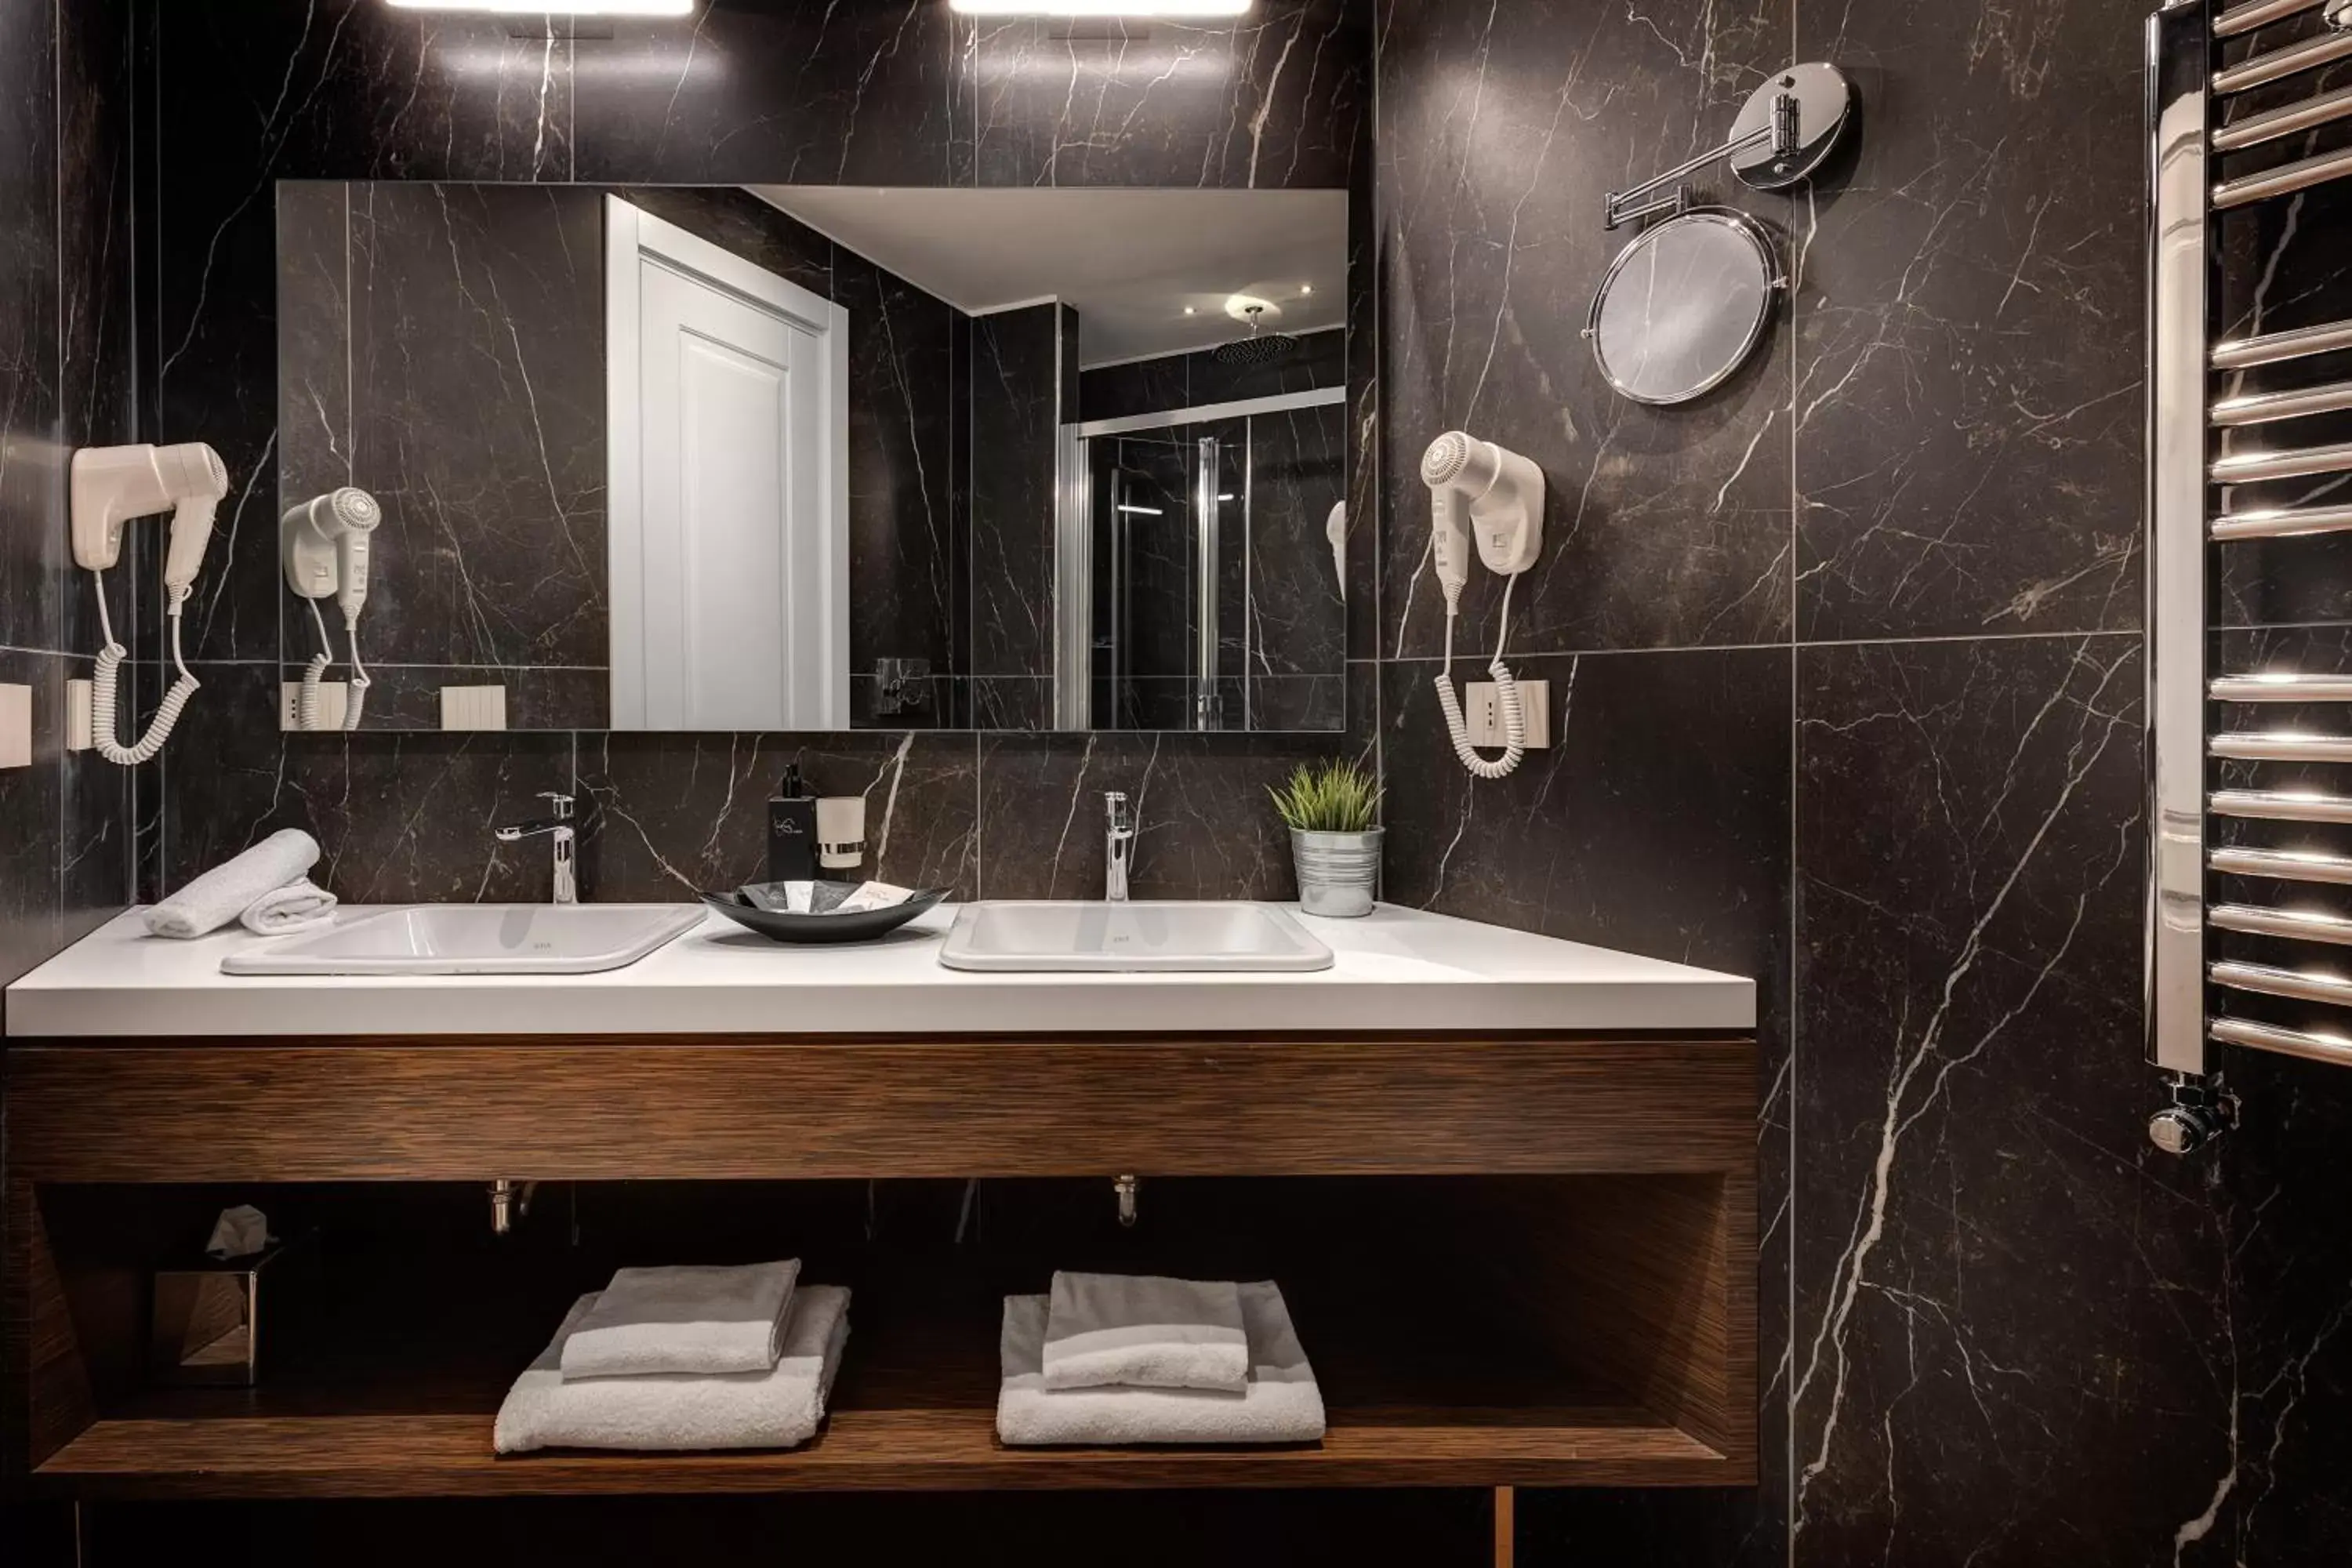 Bathroom in Rome Art Hotel - Gruppo Trevi Hotels